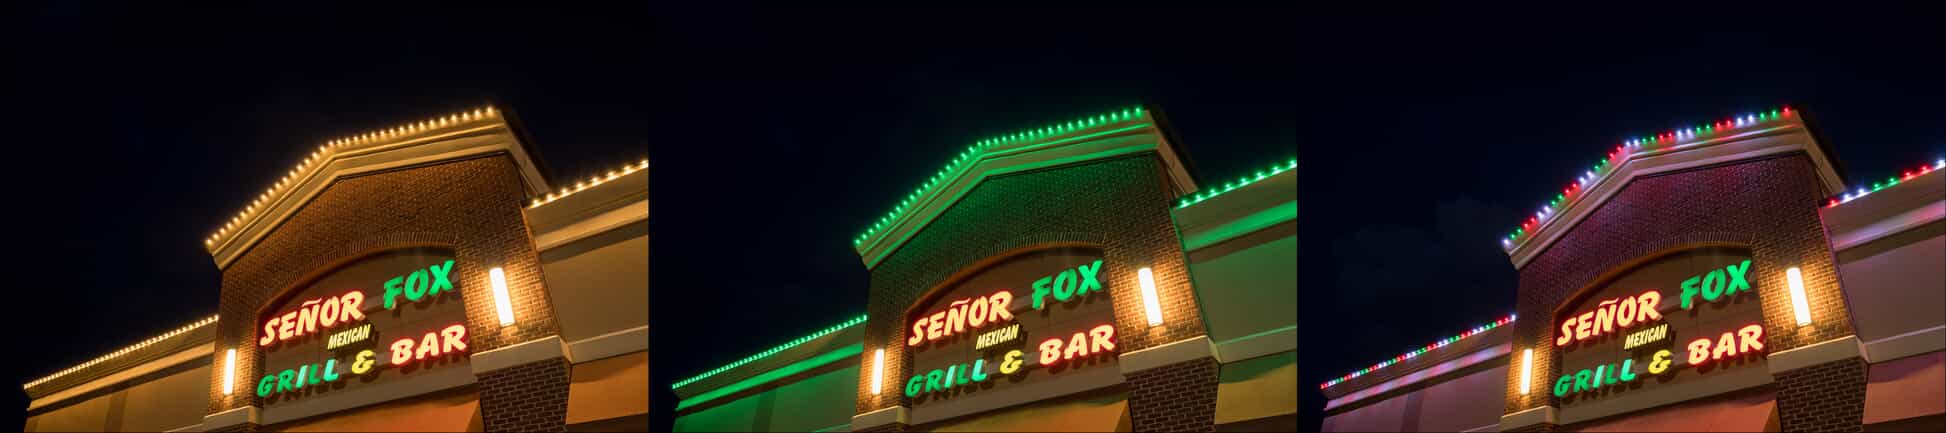 Senor Fox Grill & Bar with gold holiday lighting, green holiday lighting, and white, green and red holiday lighting.